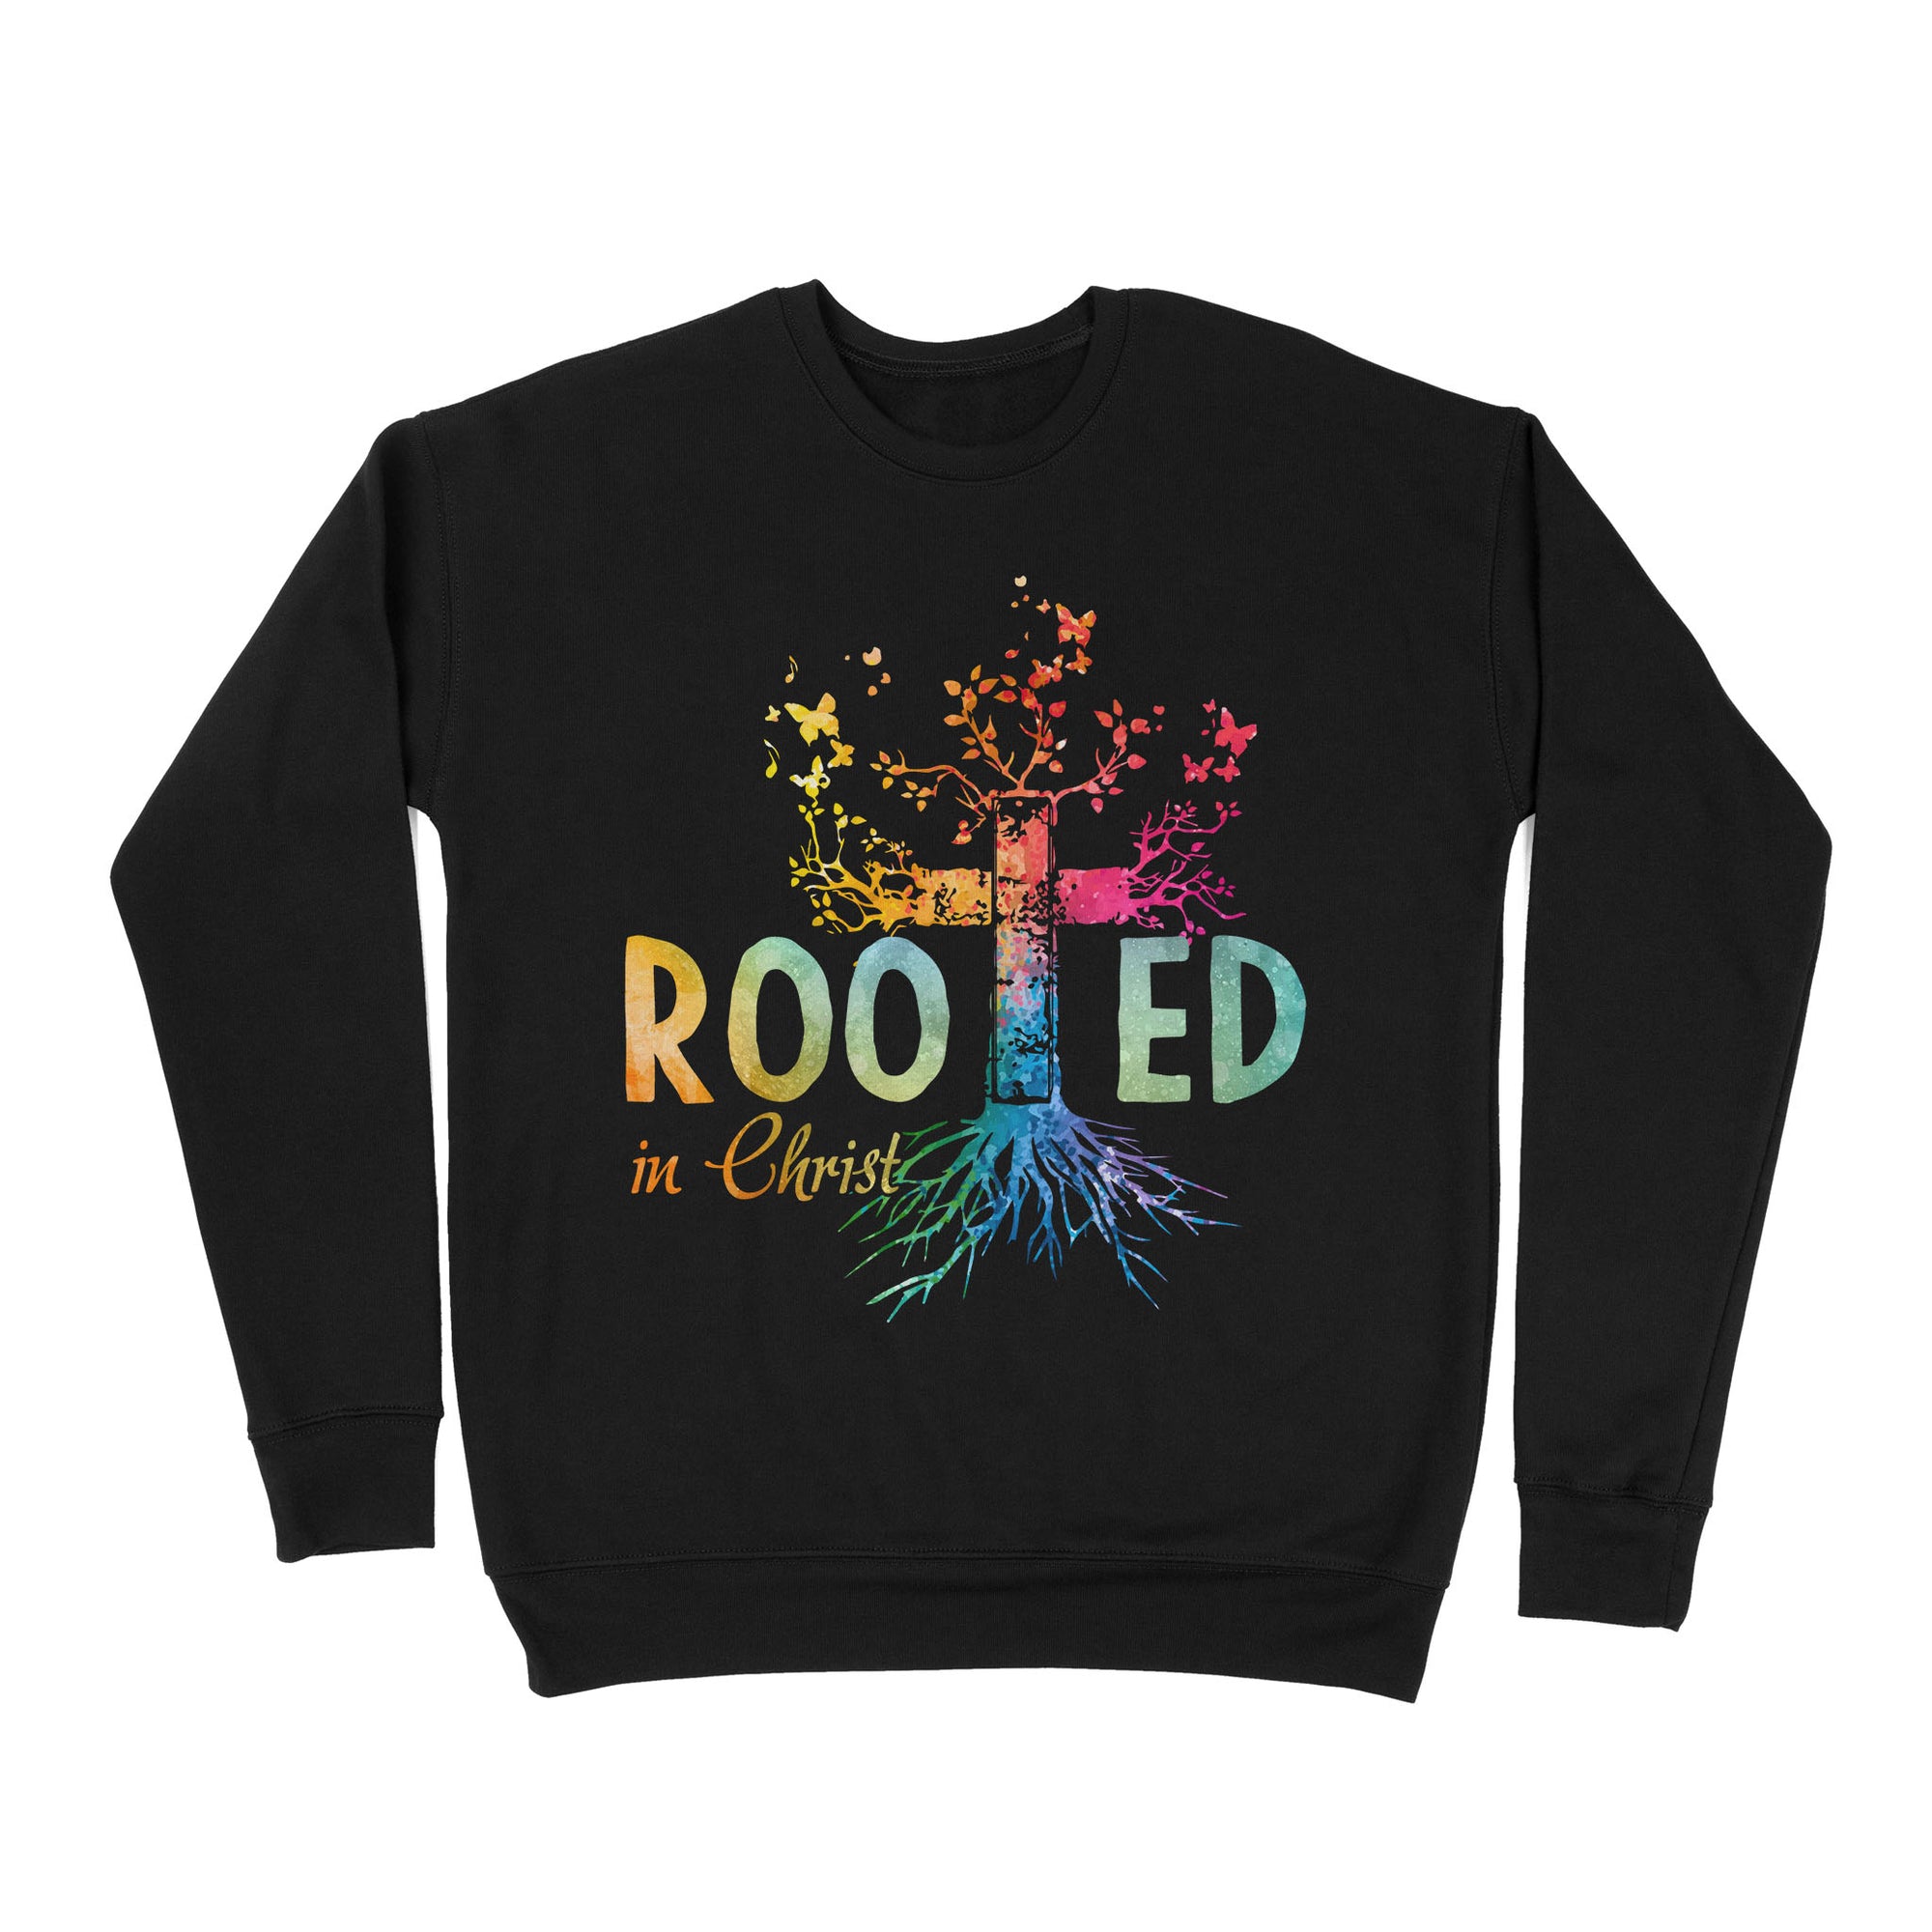 Rooted In Christ - Premium Crew Neck Sweatshirt